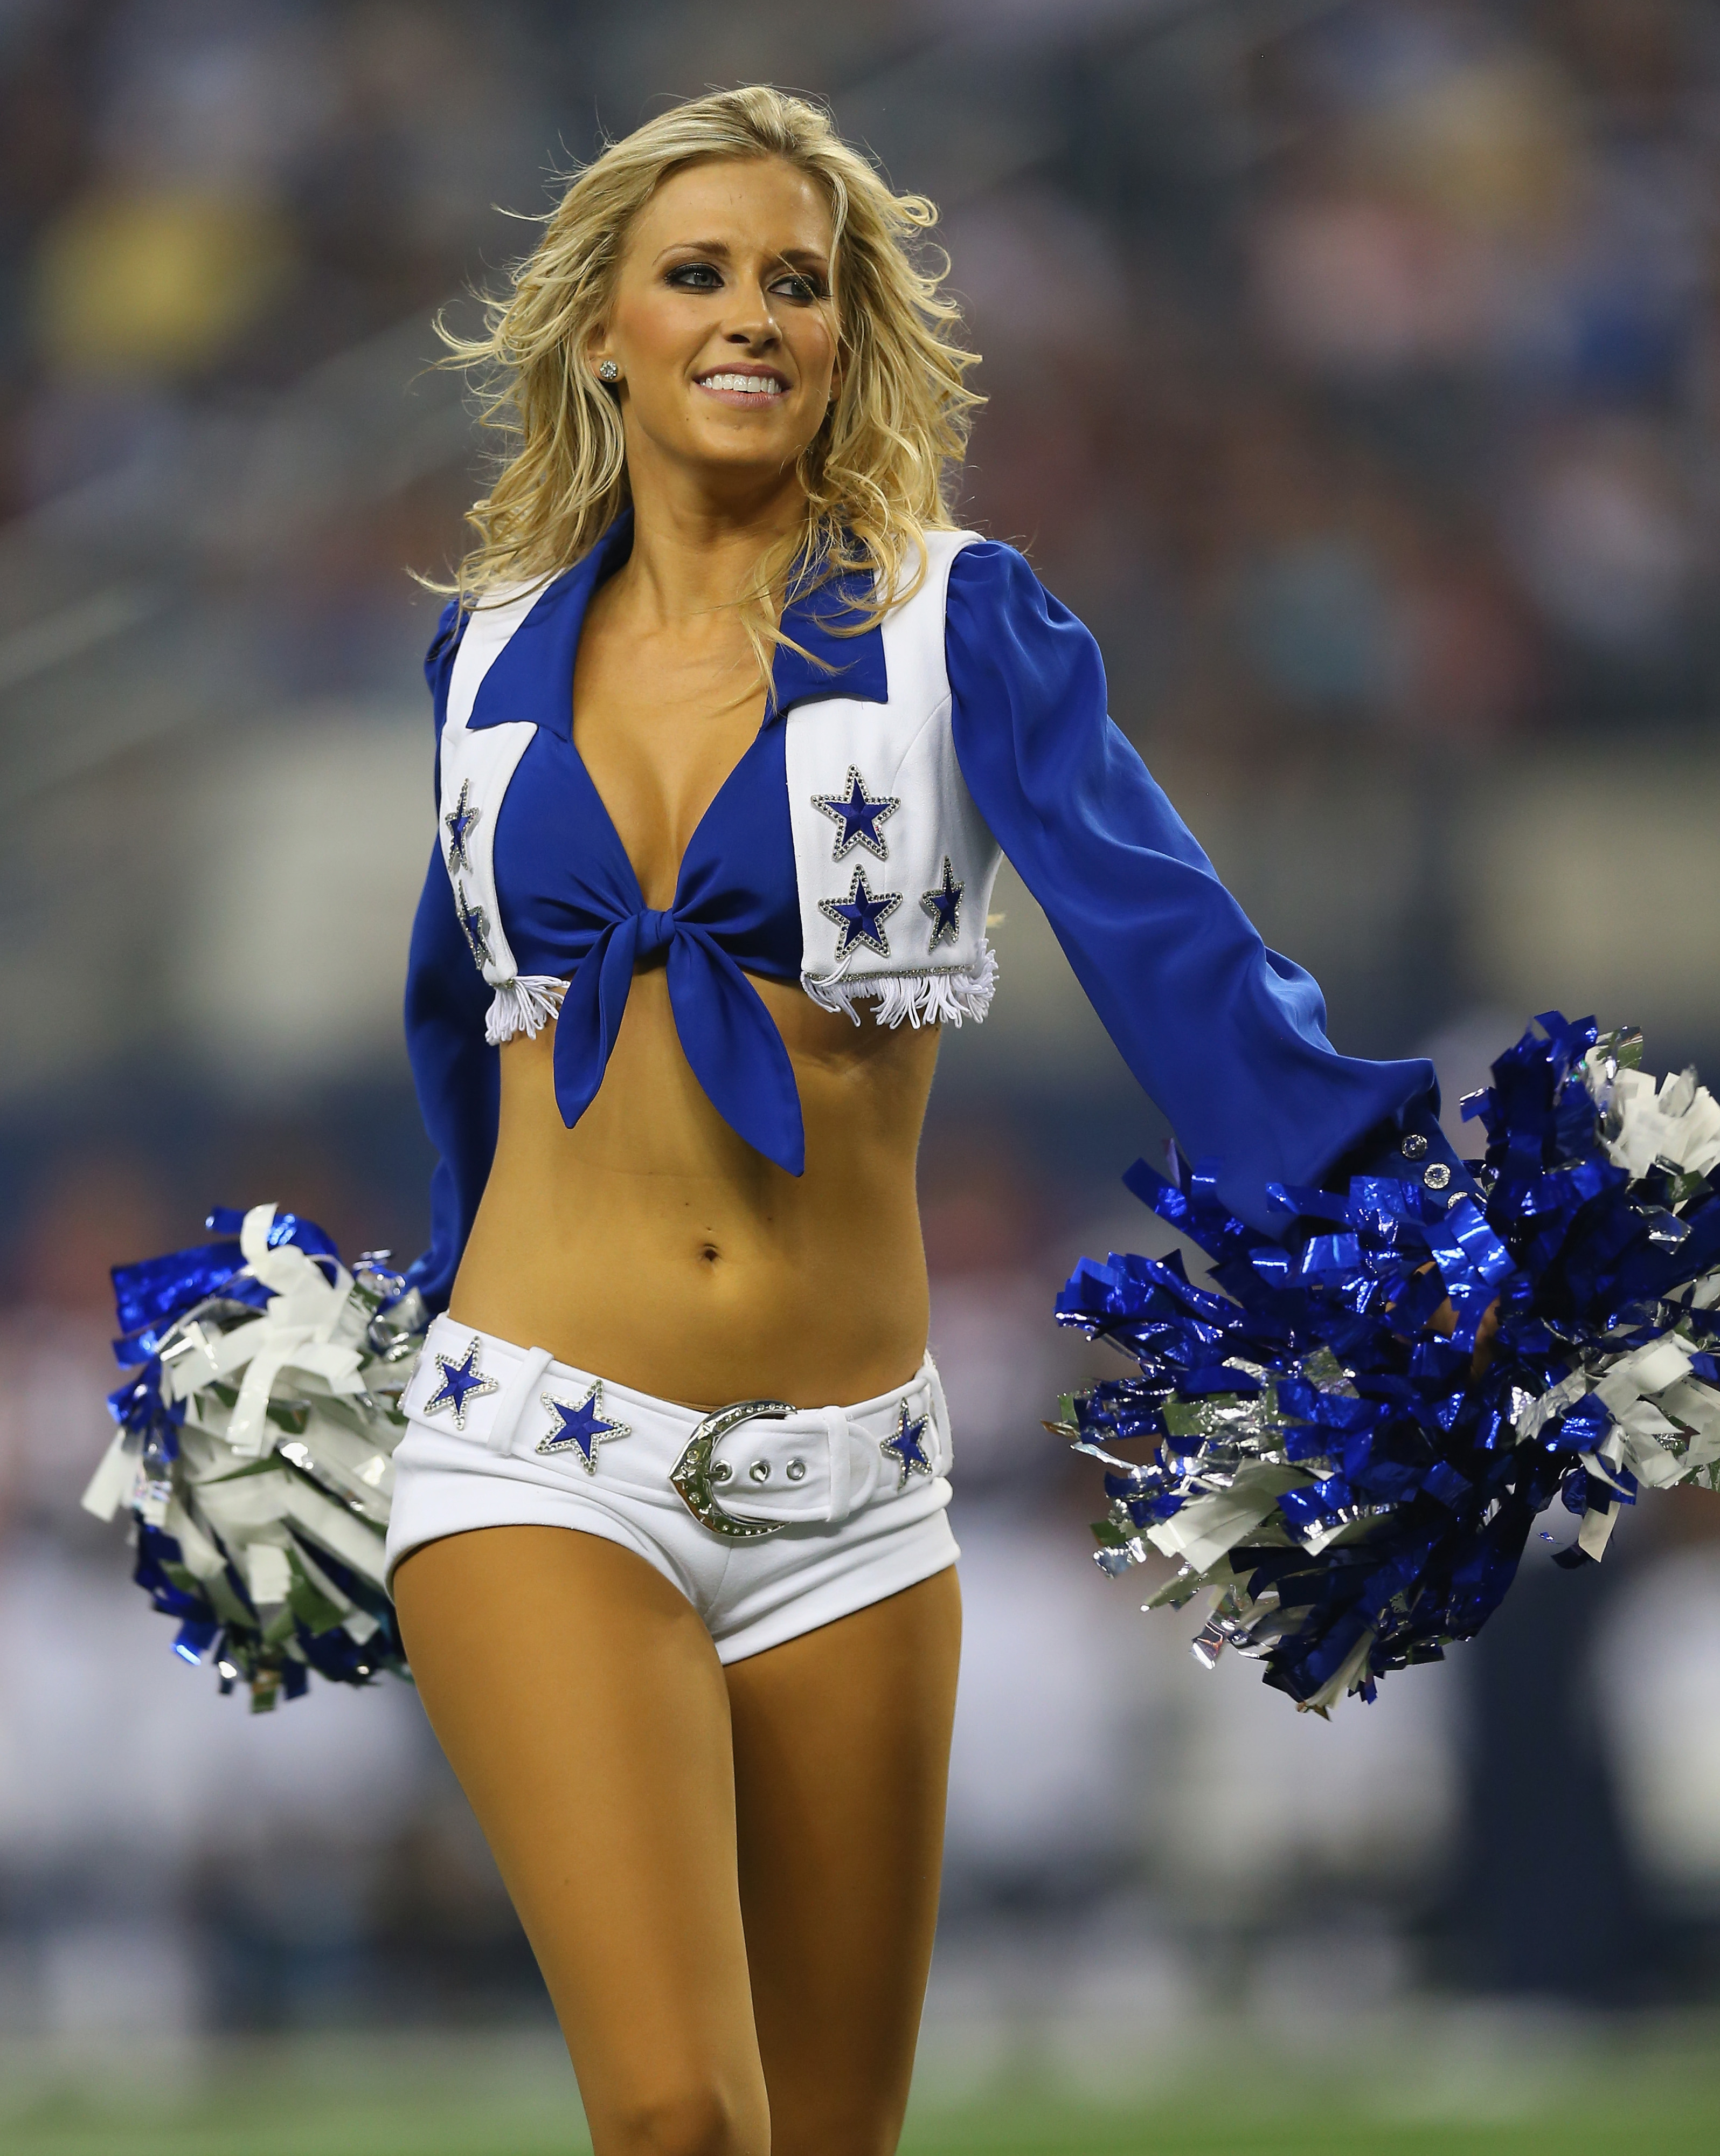 A Dallas Cowboys cheerleader during the preseason